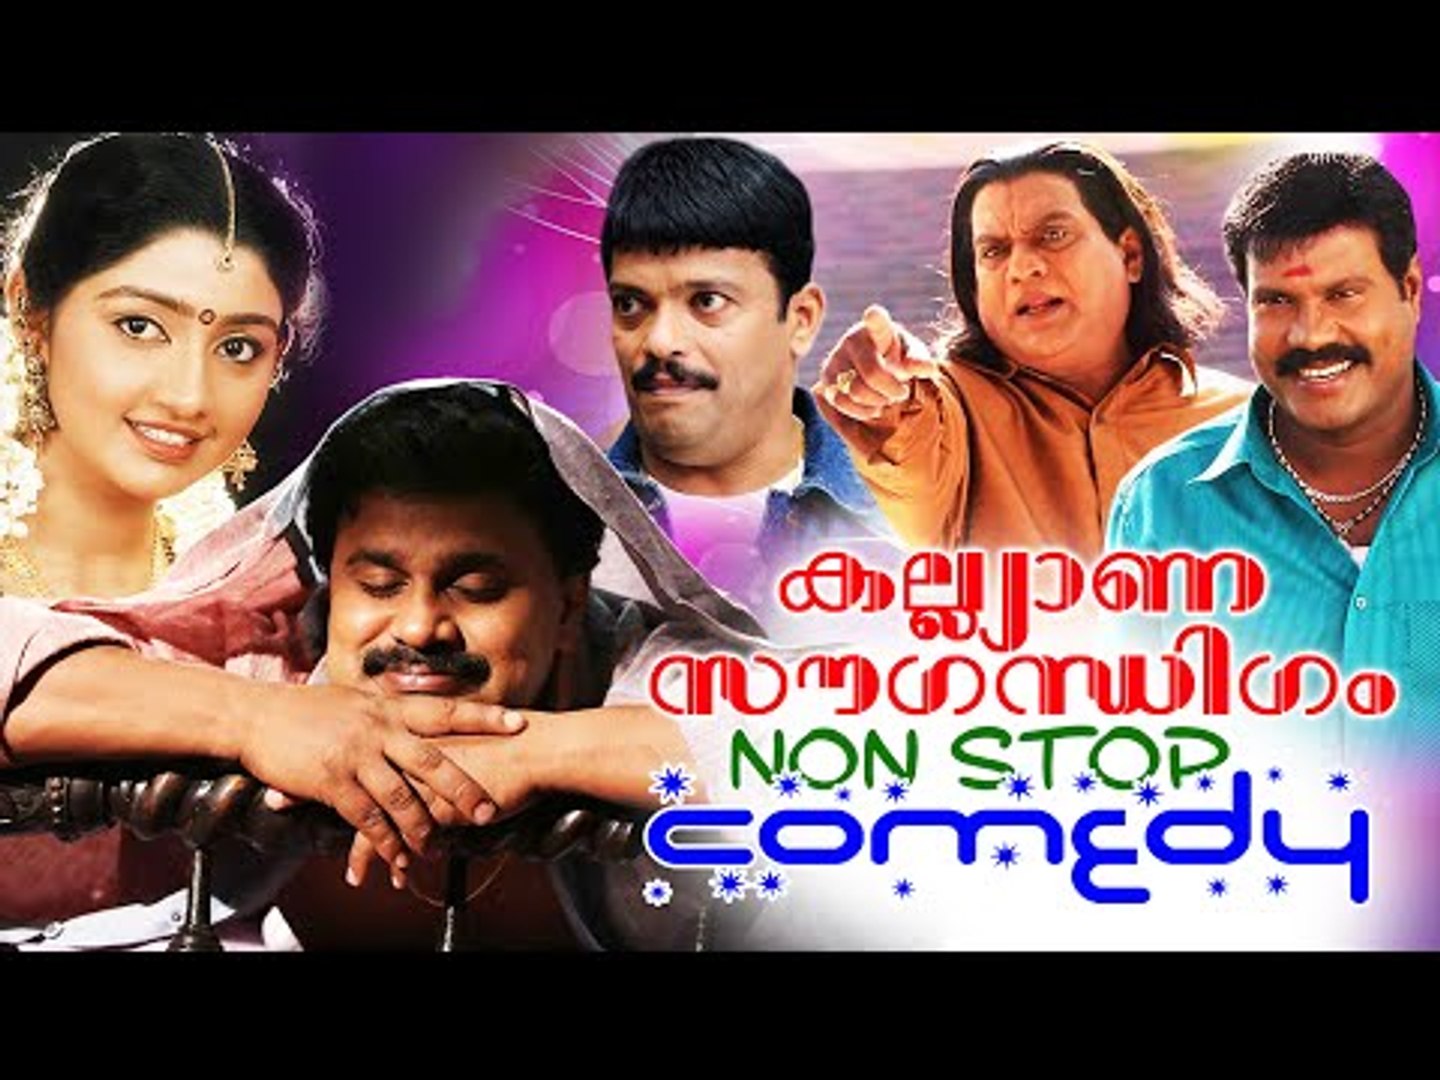 Malayalam Comedy Scenes - Kalyana Sougandhikam - Non Stop Comedy - Malayalam Comedy Movies